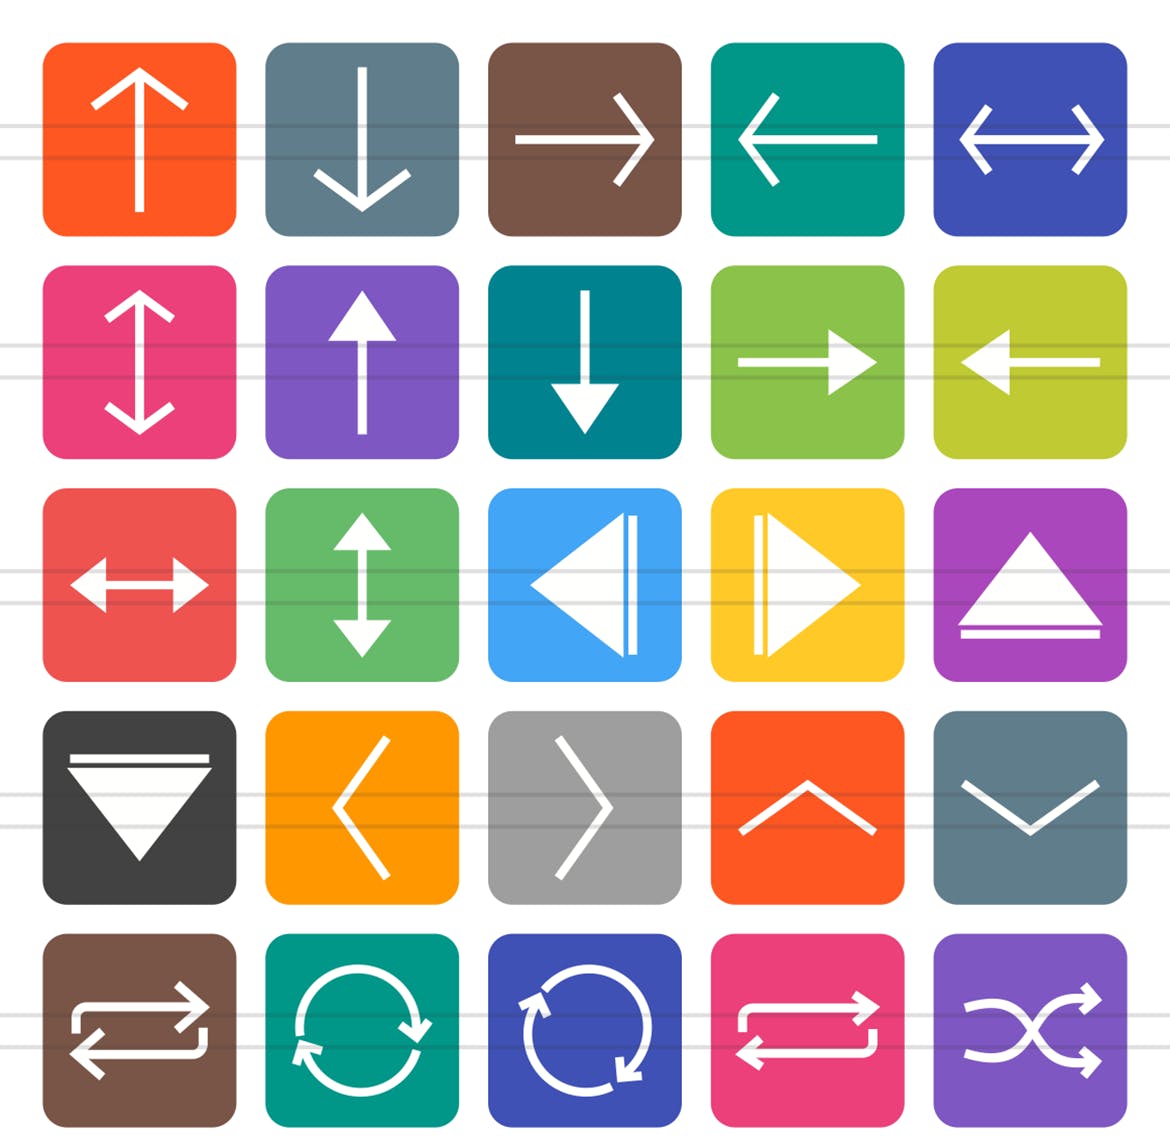 50枚箭头圆角图标素材 50 Arrows Flat Round Corner Icons插图(1)